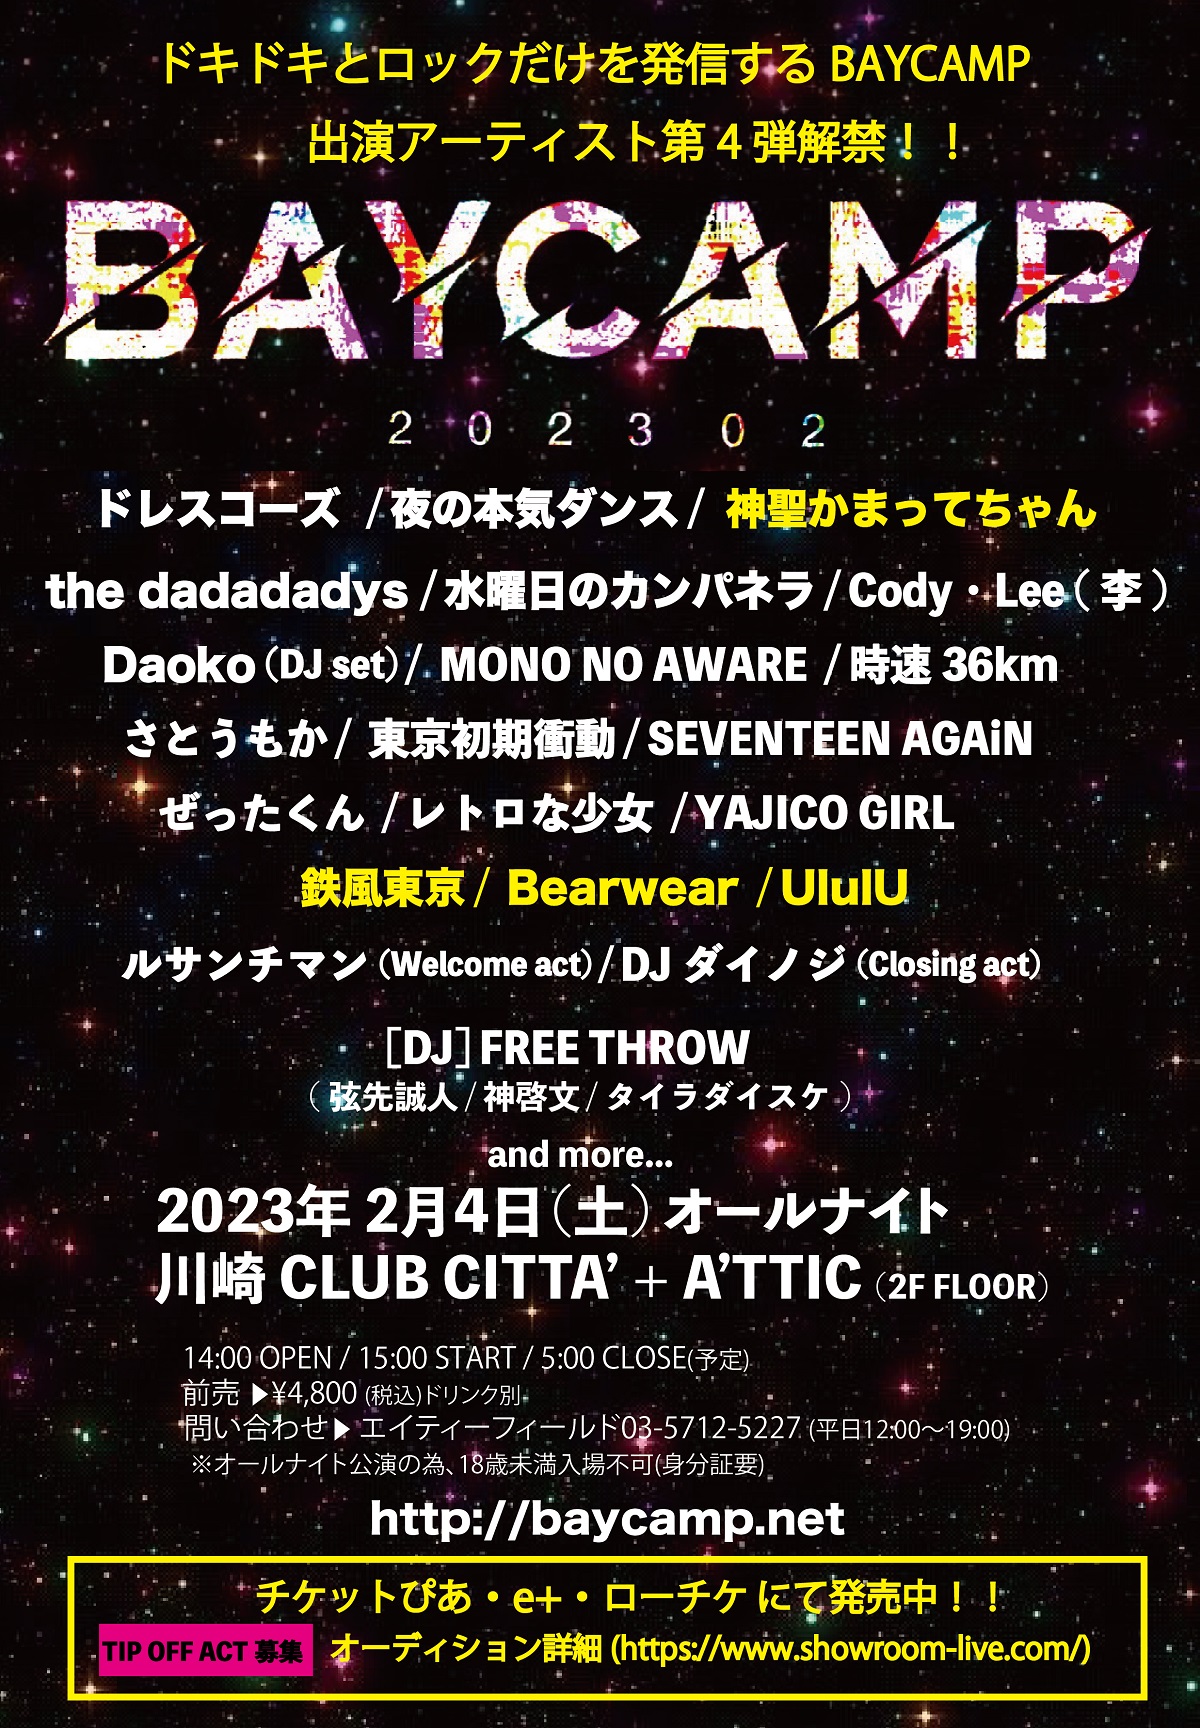 Baycamp 2302 出演アーティスト第4弾で神聖かまってちゃん 鉄風東京 Bearwear Ululu発表